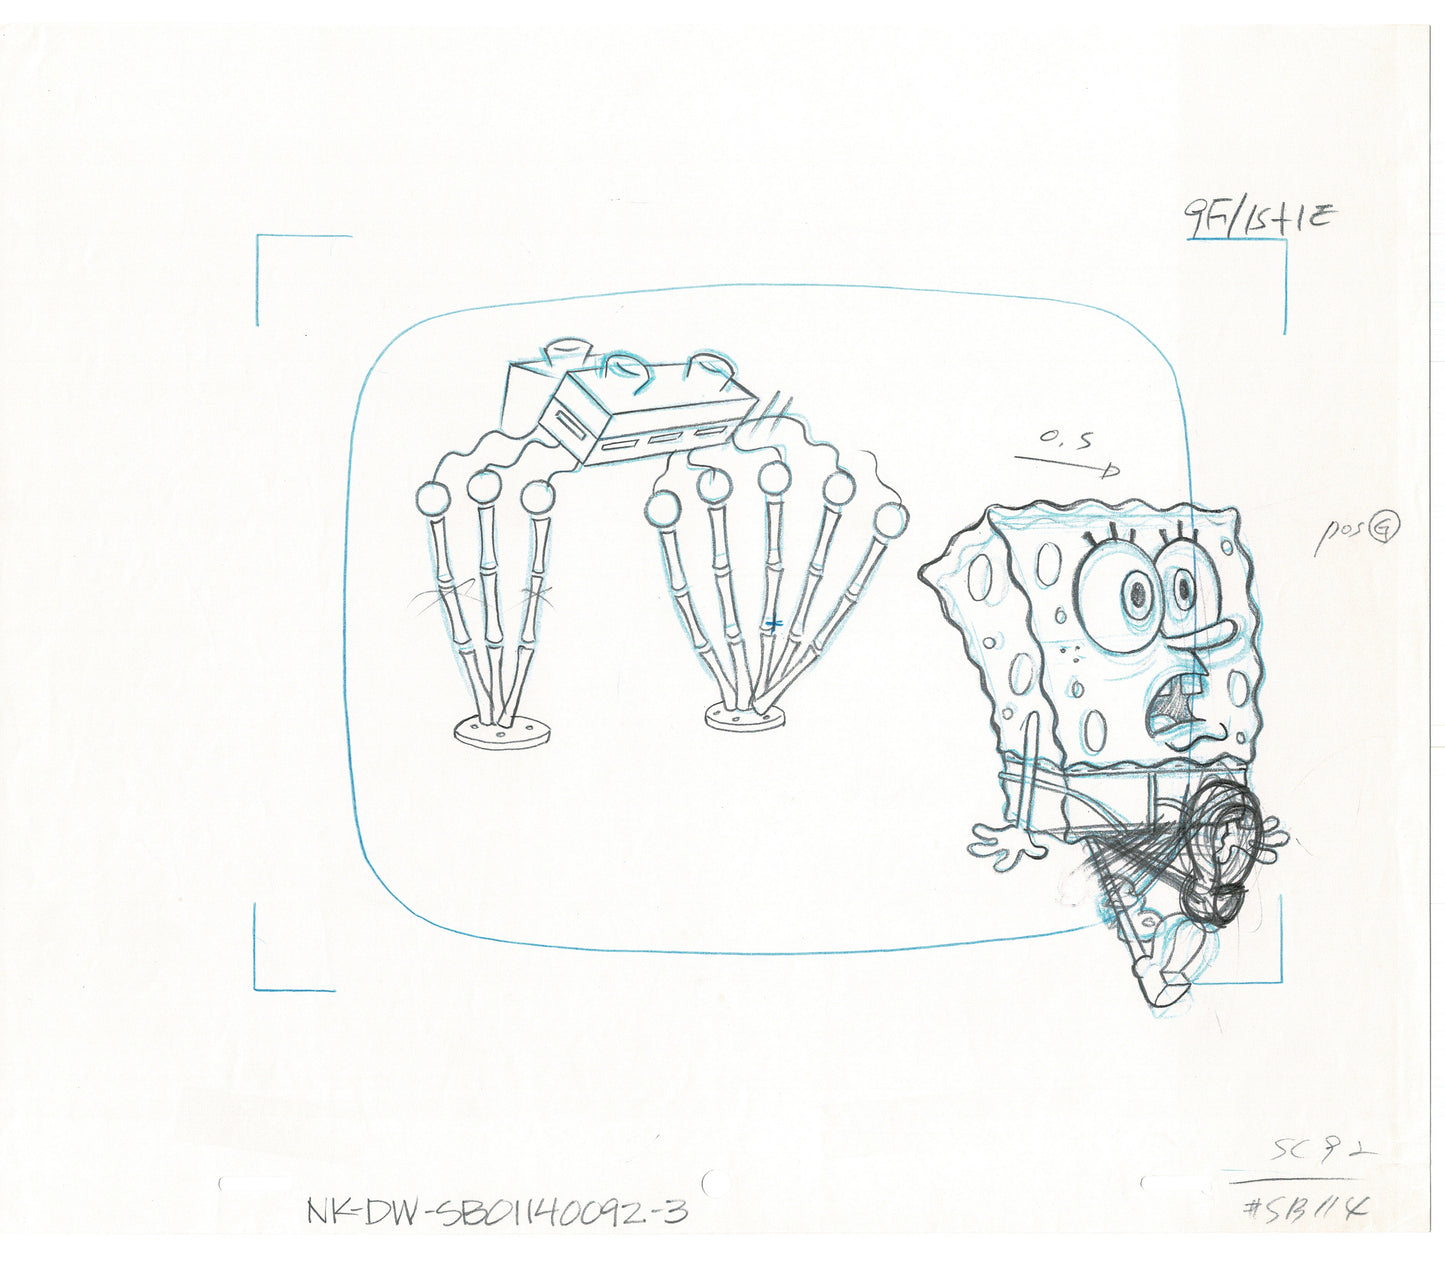 Spongebob Squarepants Production Animation Cel Drawing Nickelodeon 1999-2014 A-4